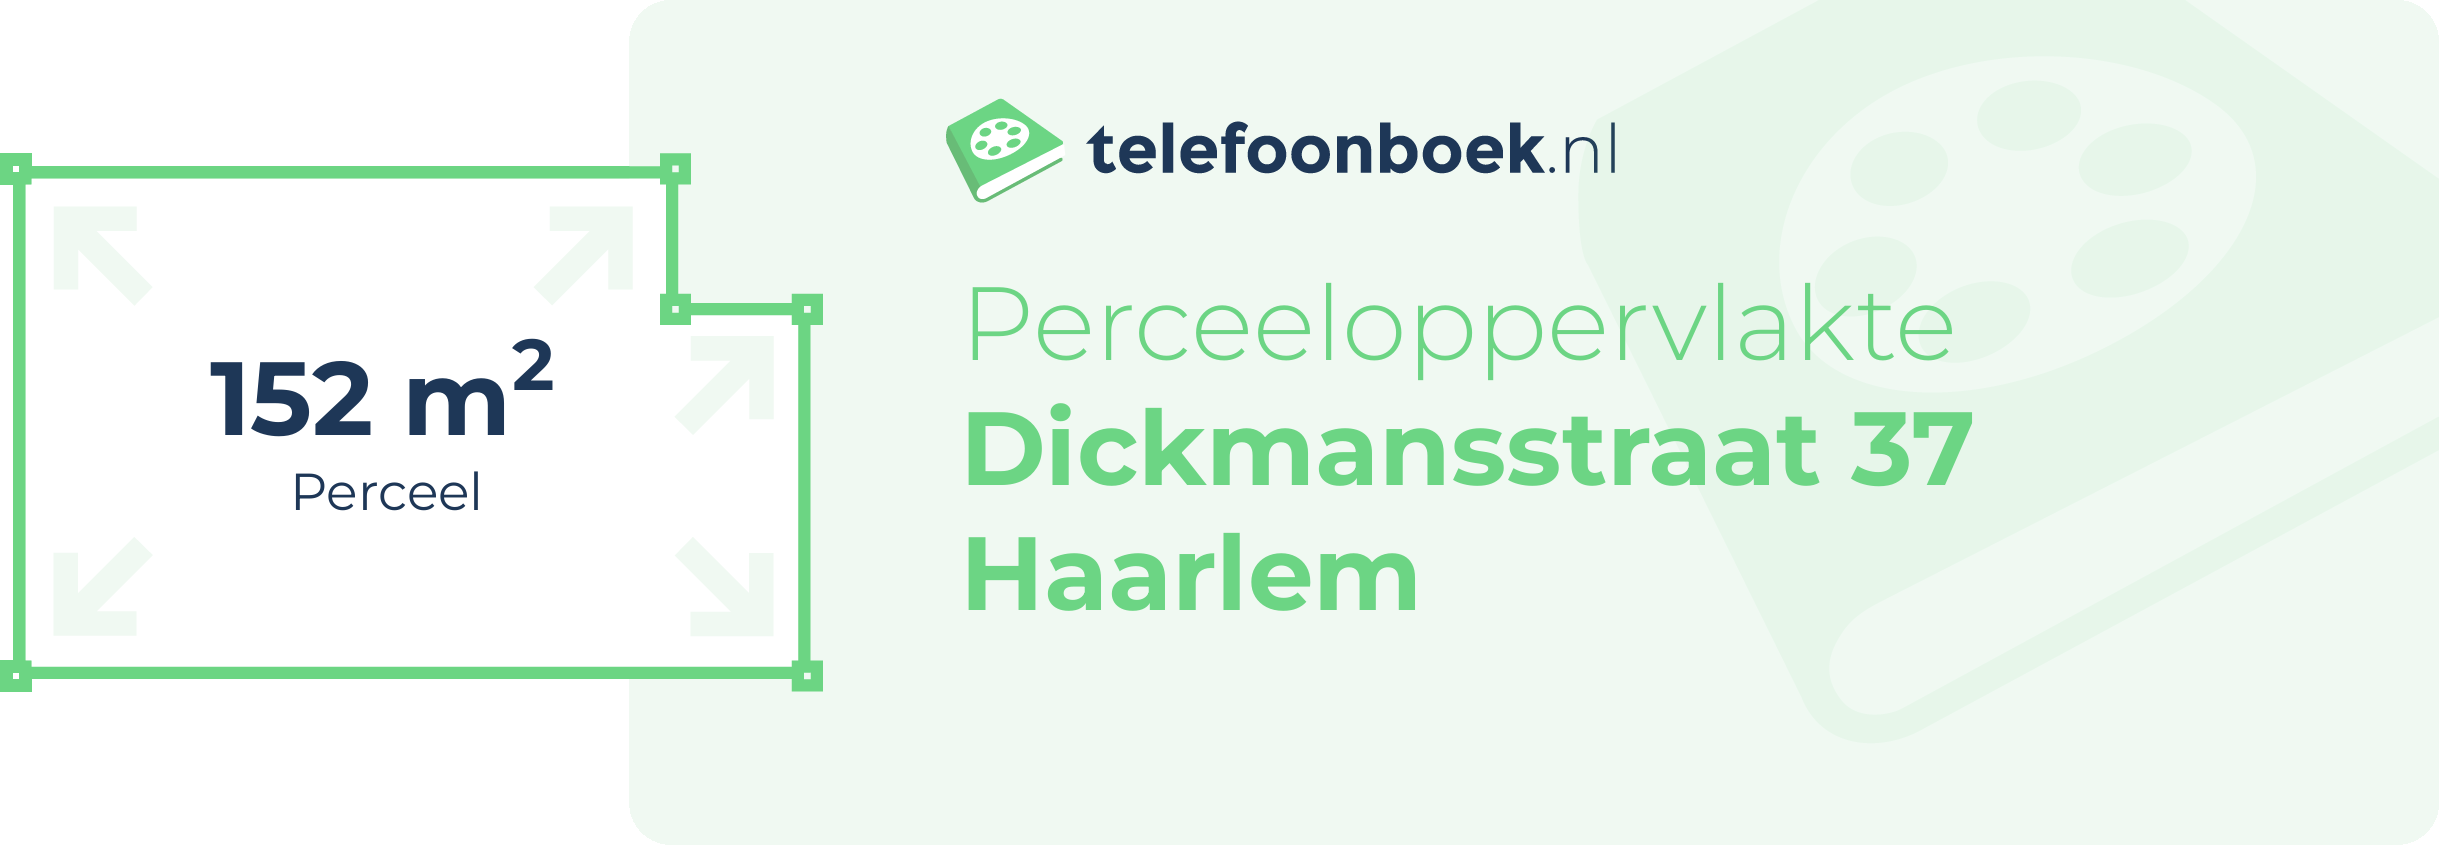 Perceeloppervlakte Dickmansstraat 37 Haarlem